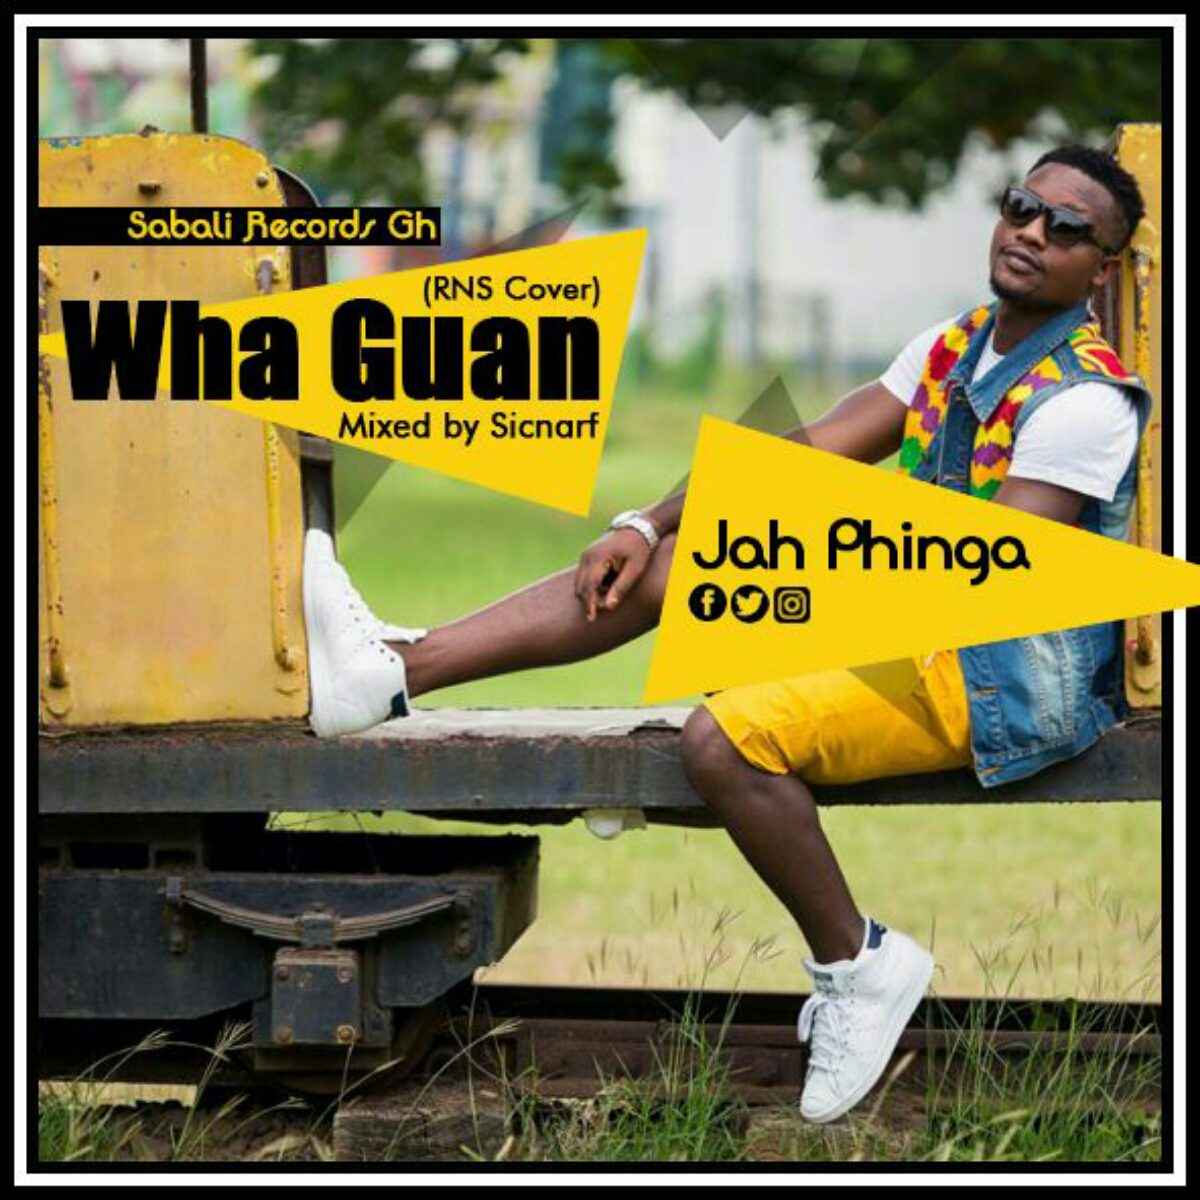 Jah Phinga – Wha guan (Mixed by Sicnarf)